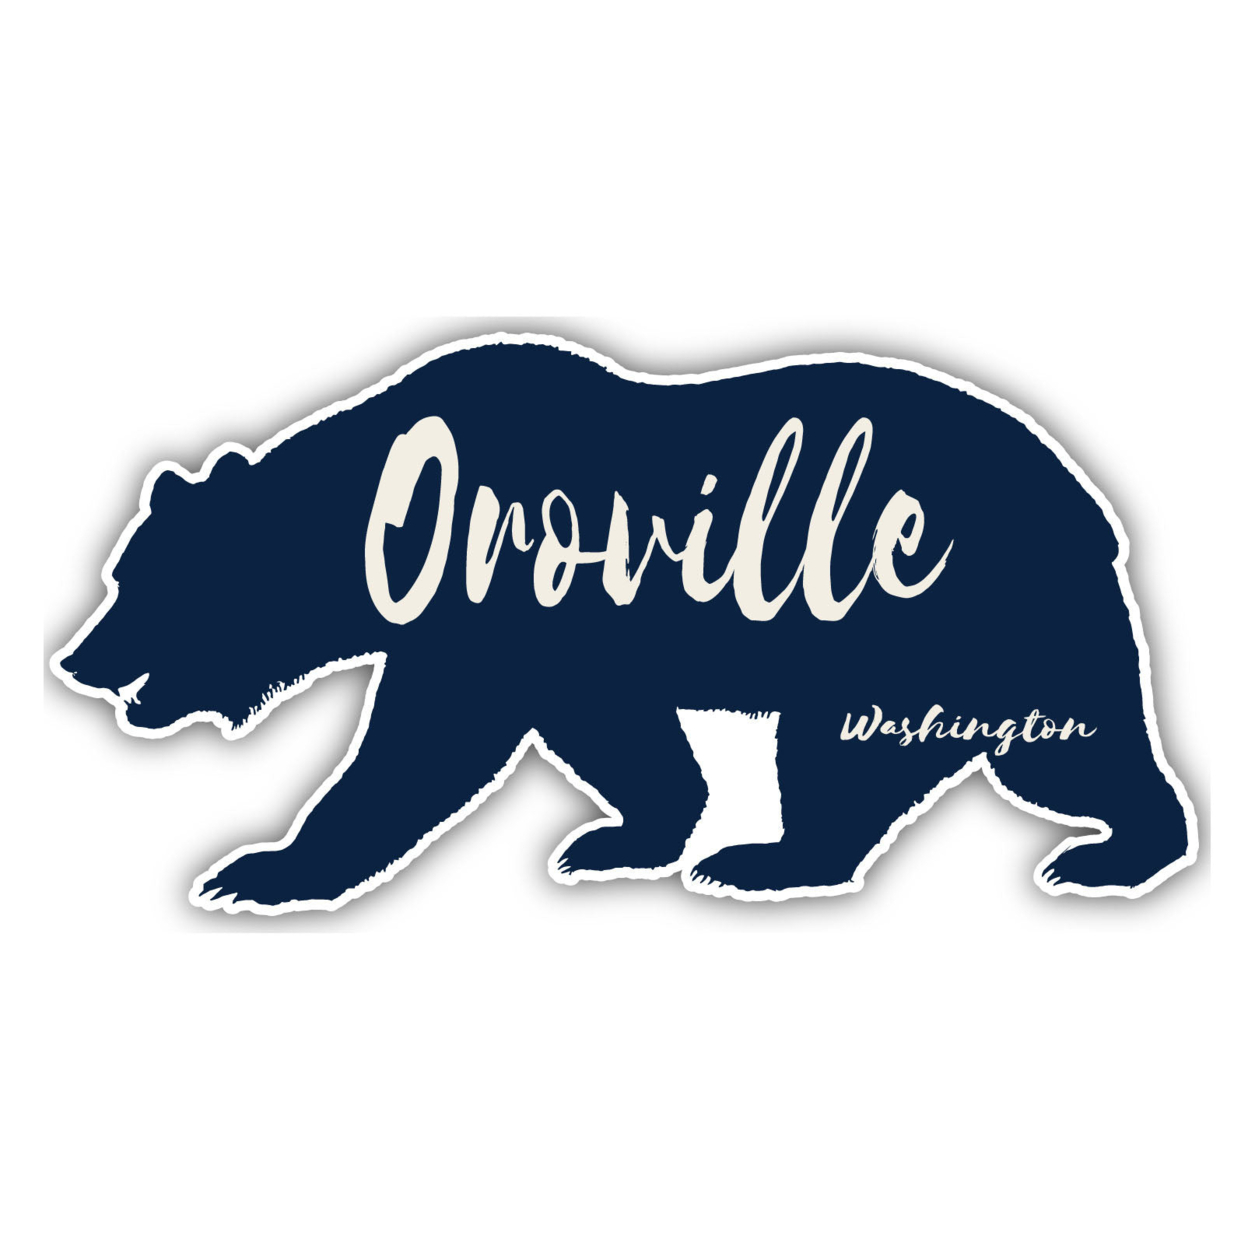 Oroville Washington Souvenir Decorative Stickers (Choose Theme And Size) - Single Unit, 2-Inch, Bear